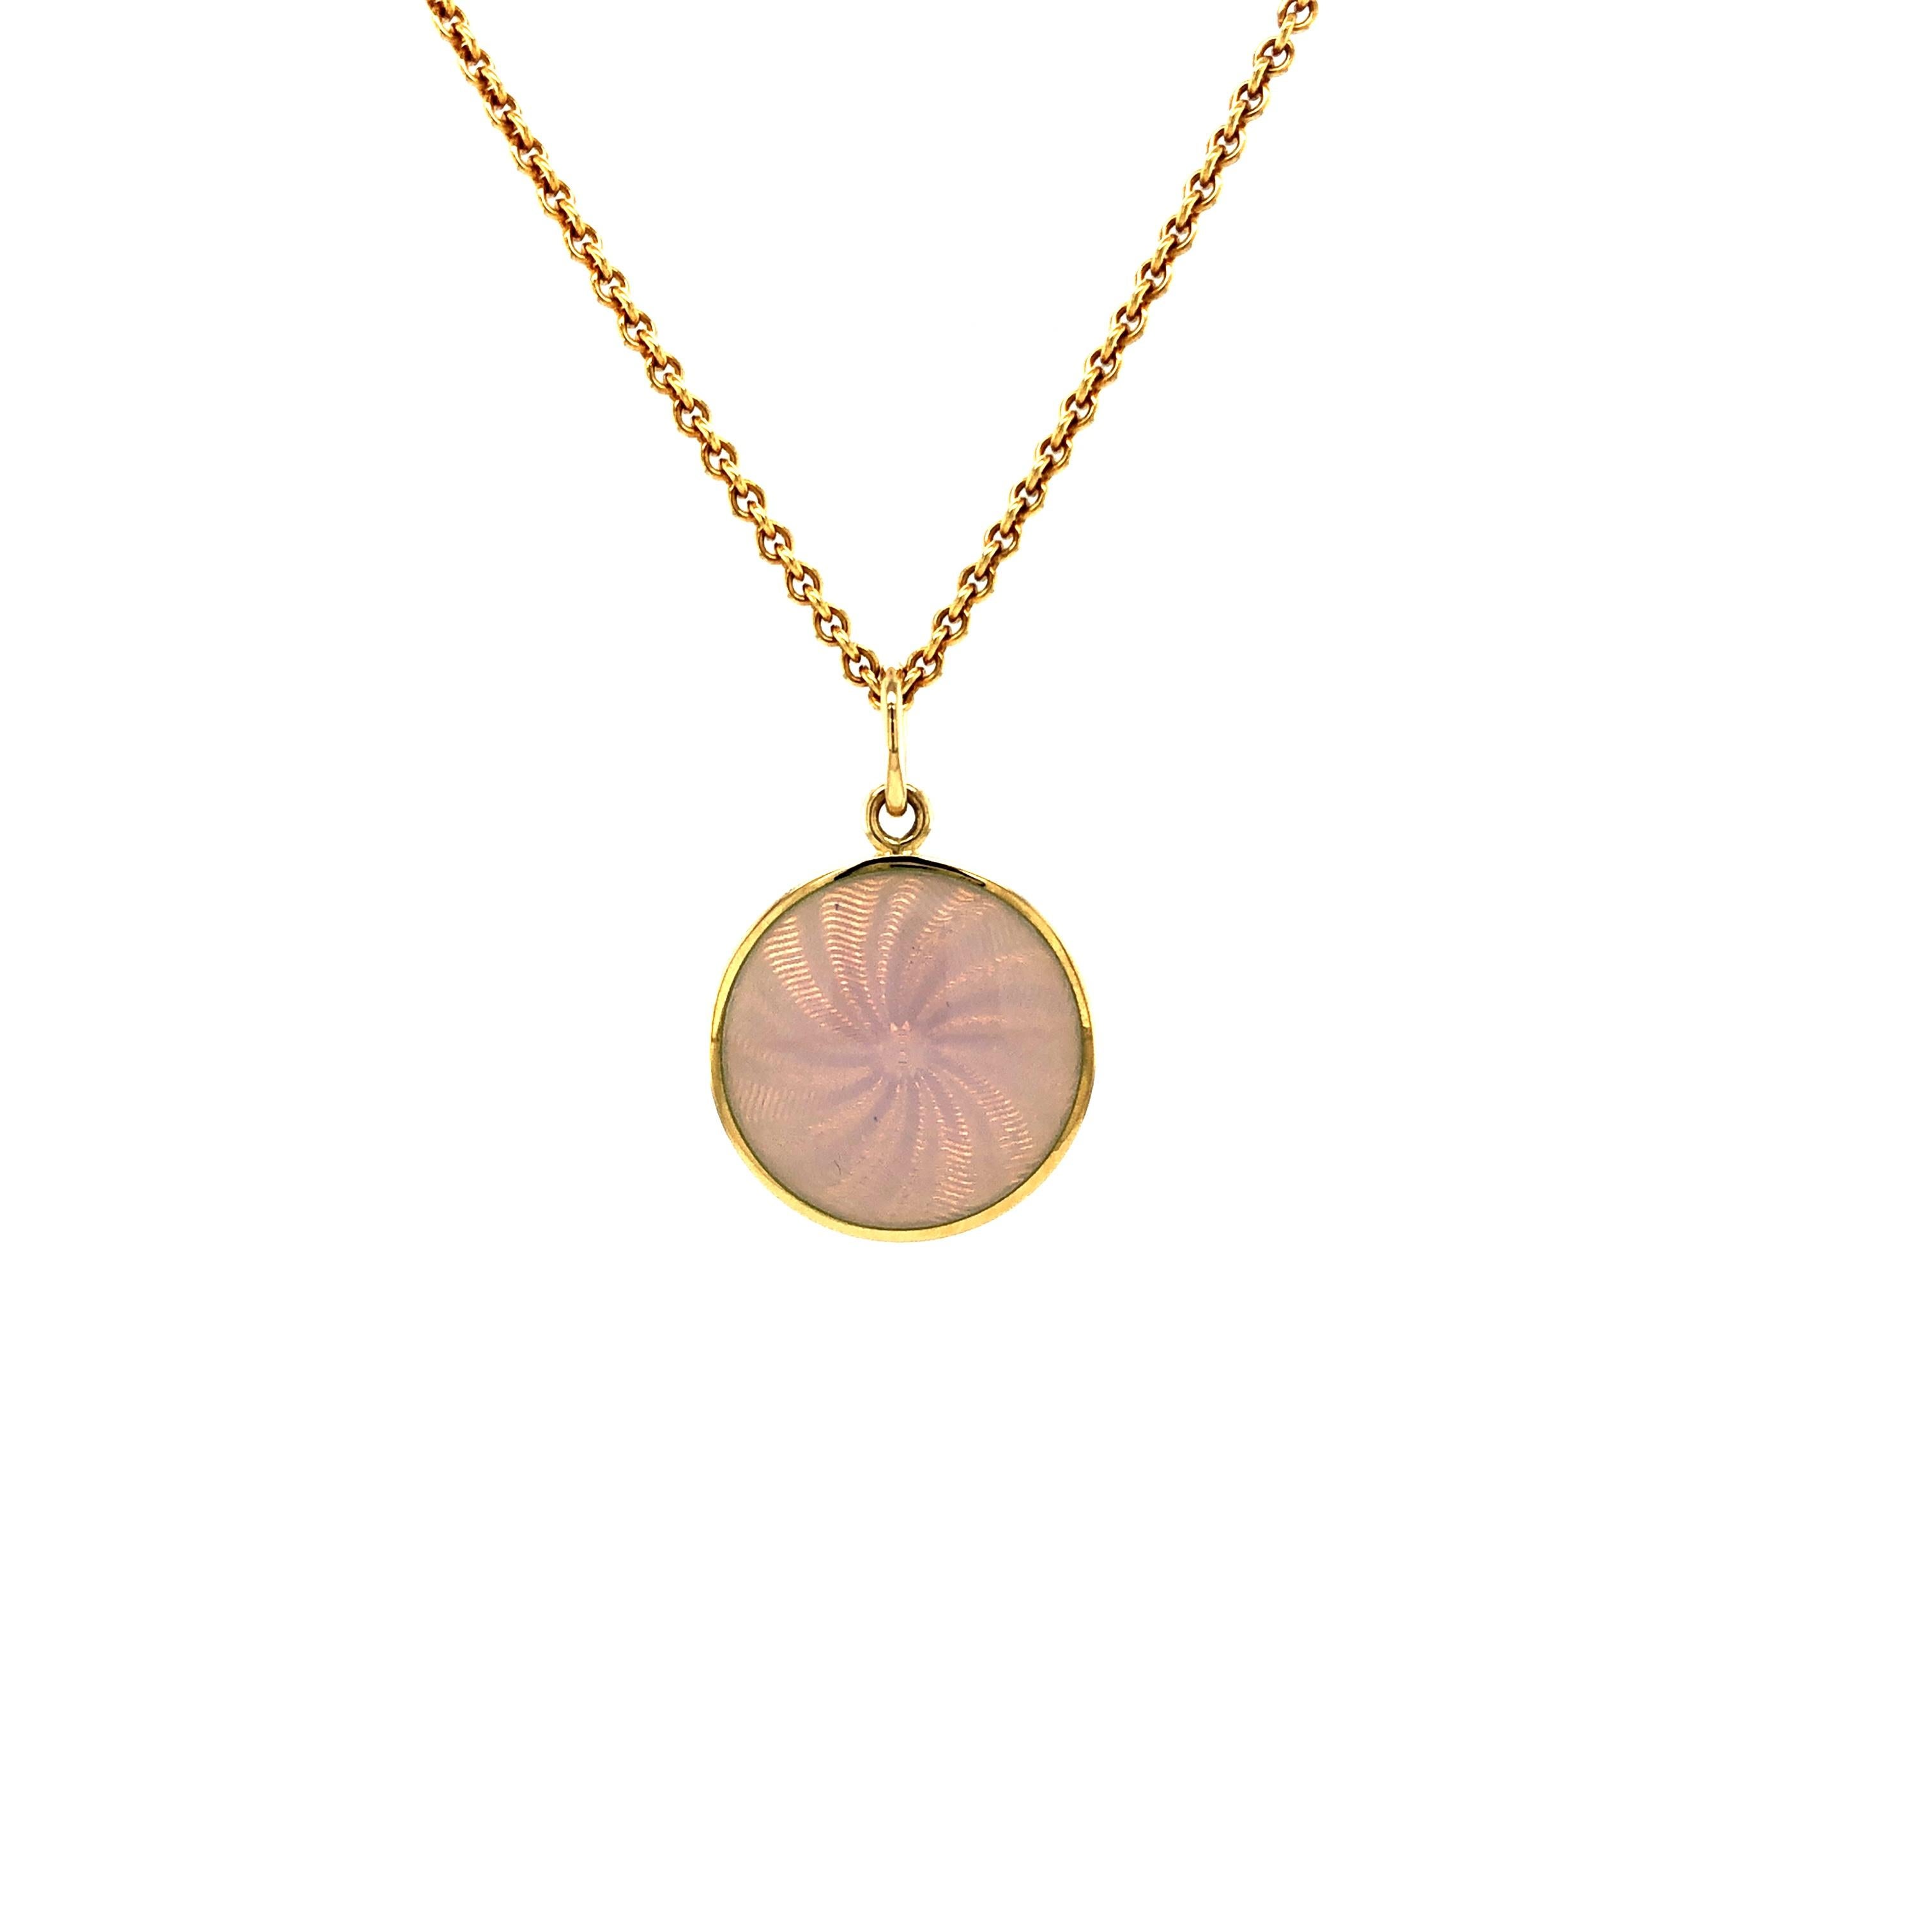 Women's Round Diskos Pendant Necklace 18k Yellow Gold  White Guilloche Enamel 15.0 mm For Sale